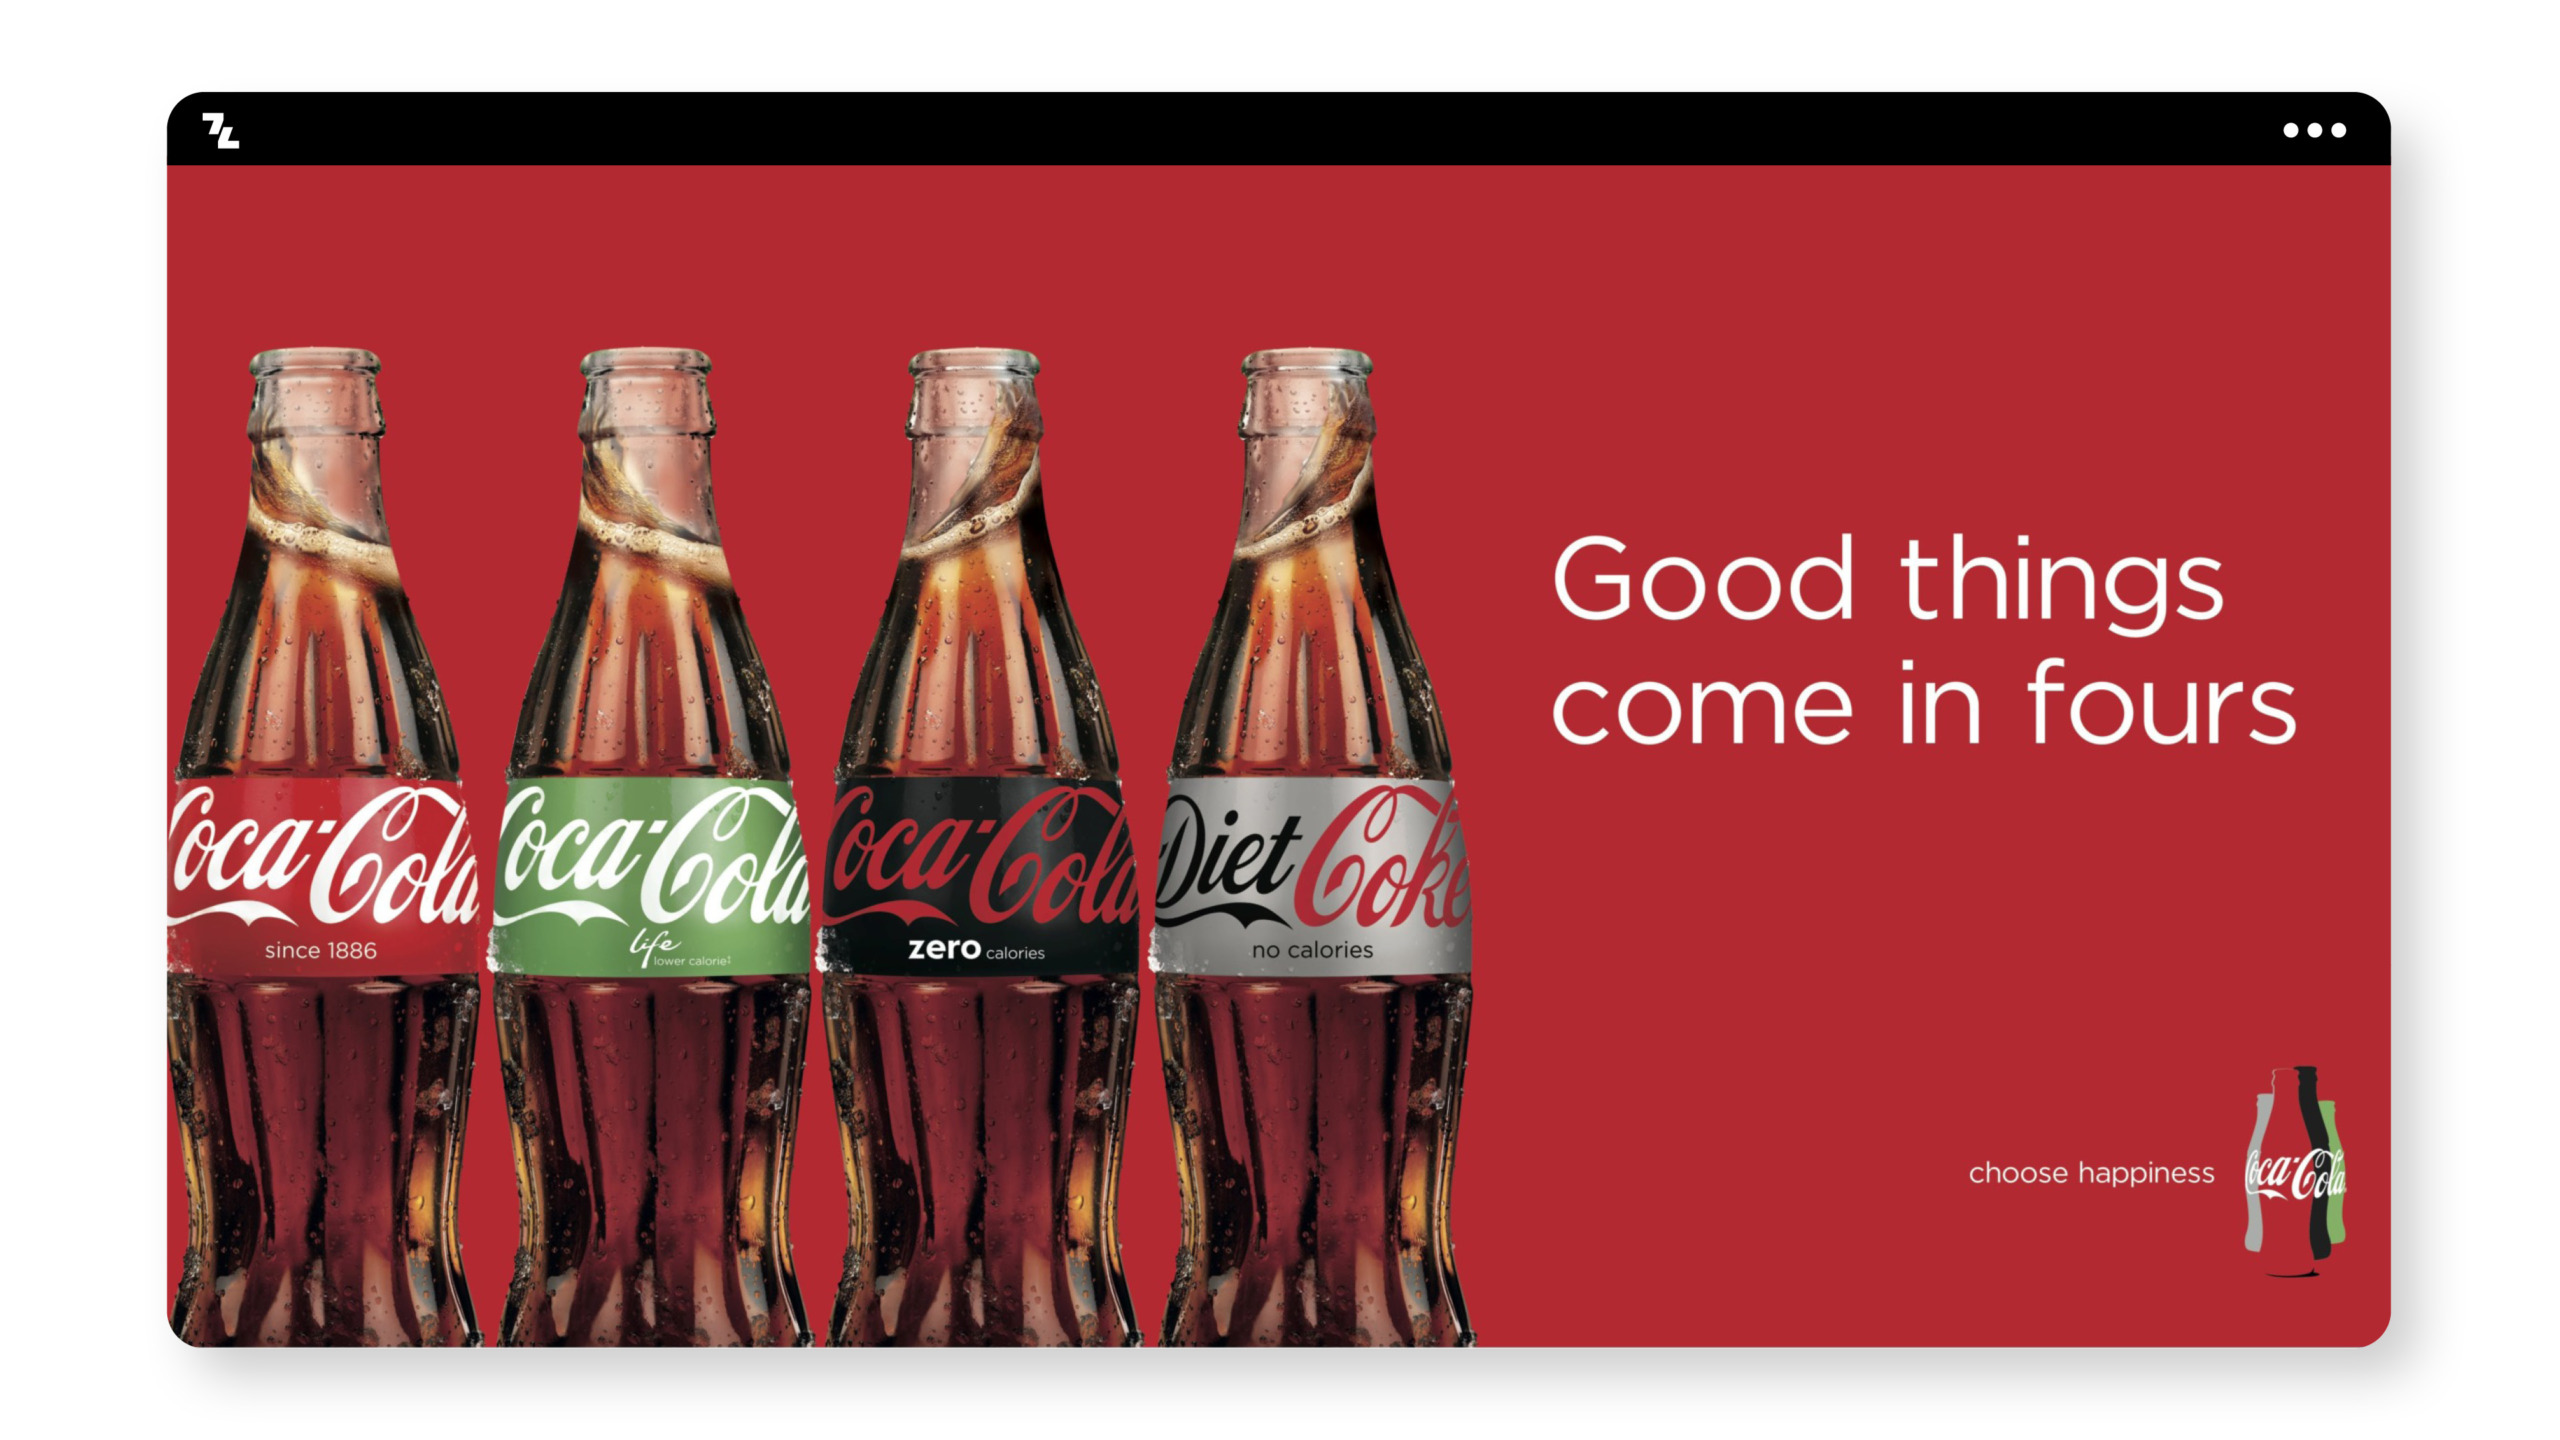 Coca Cola - a branding example.